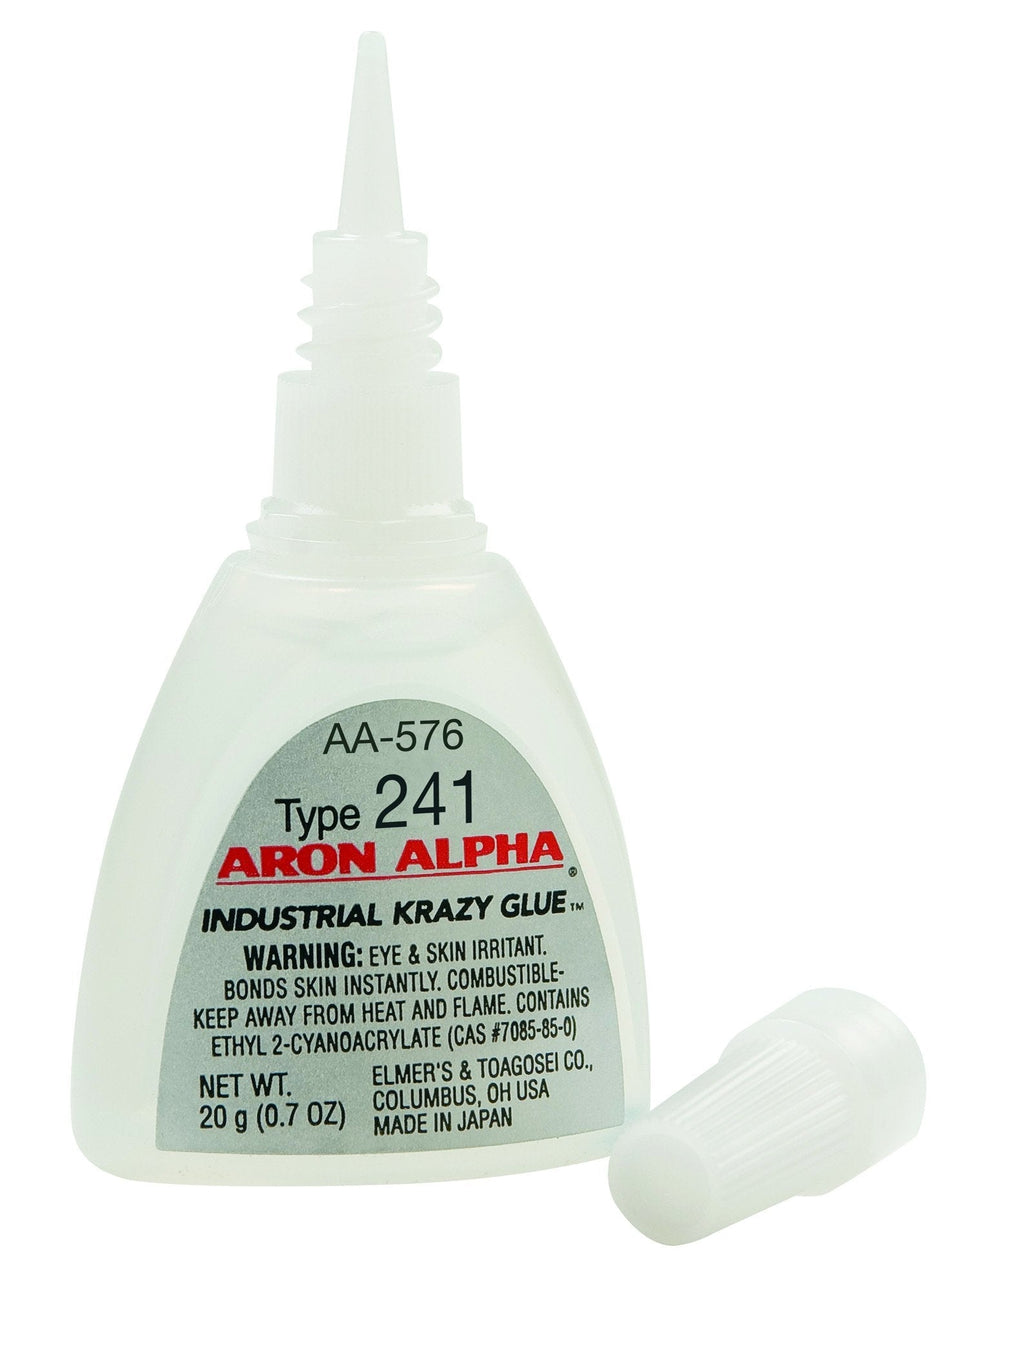  [AUSTRALIA] - Aron Alpha Type 241 (40 cps viscosity) Regular Set Instant Adhesive 20 g (0.7 oz) Bottle